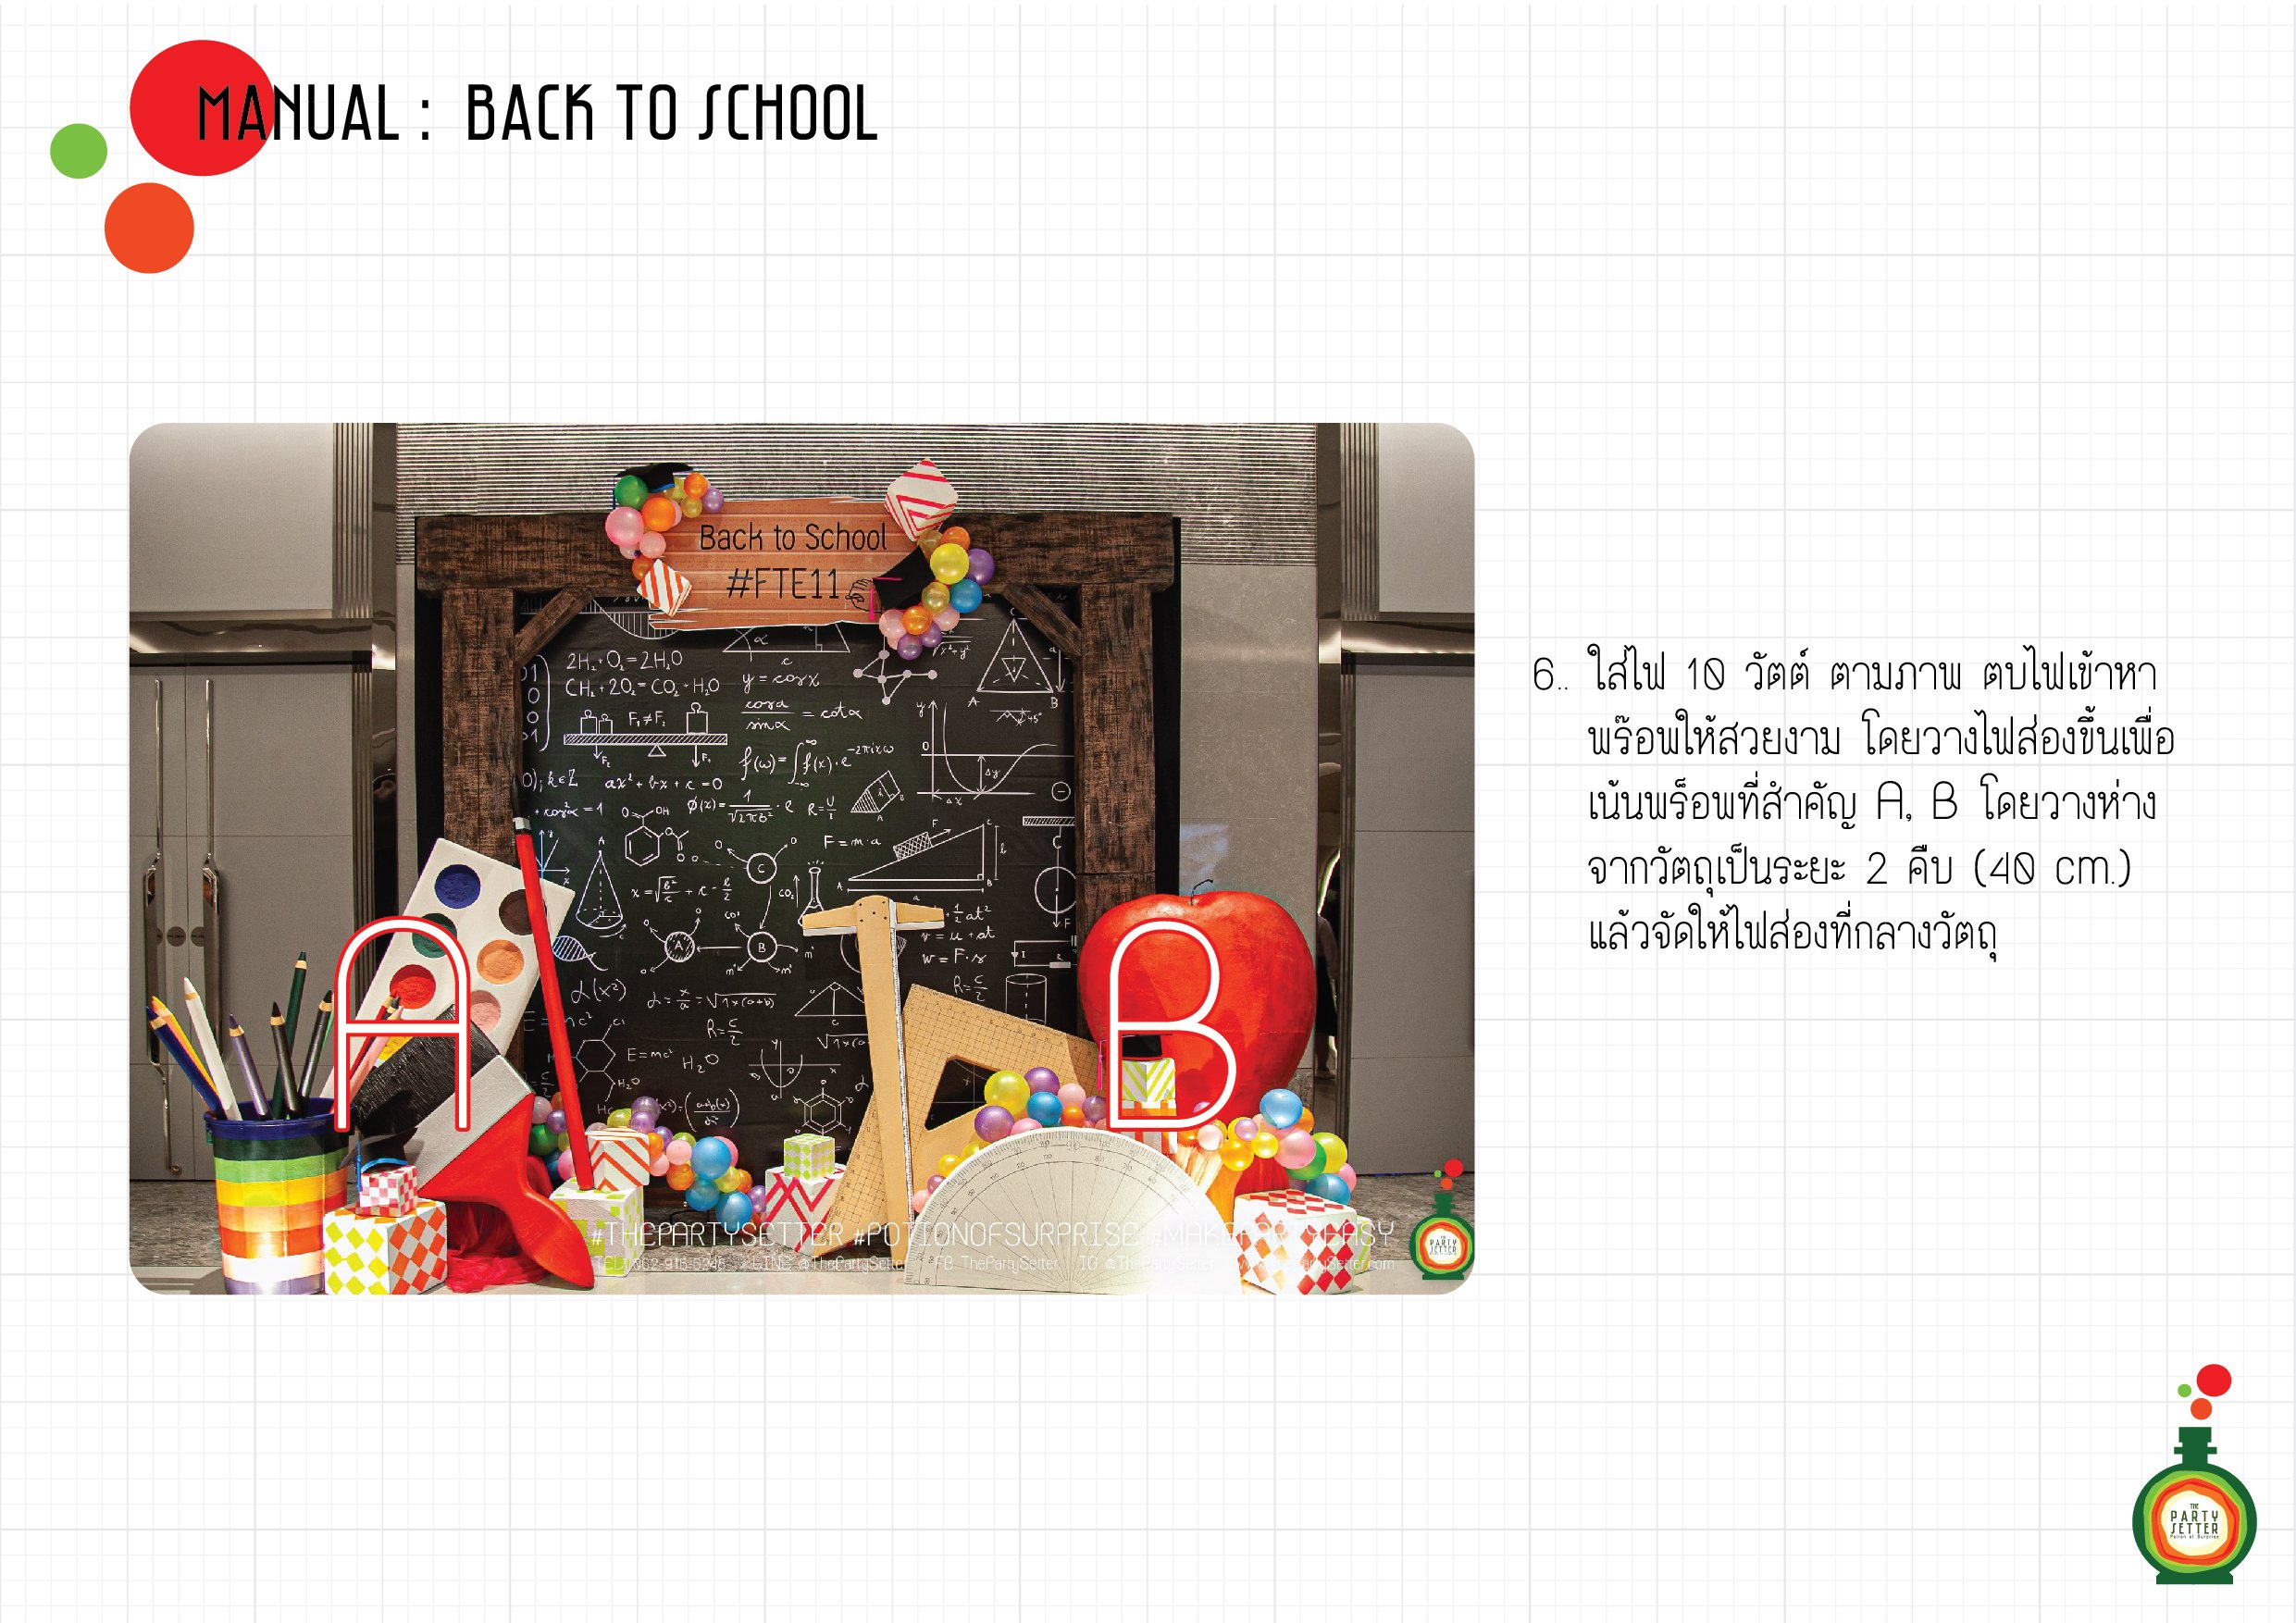 Manual_Back to School-2-06-01.jpg